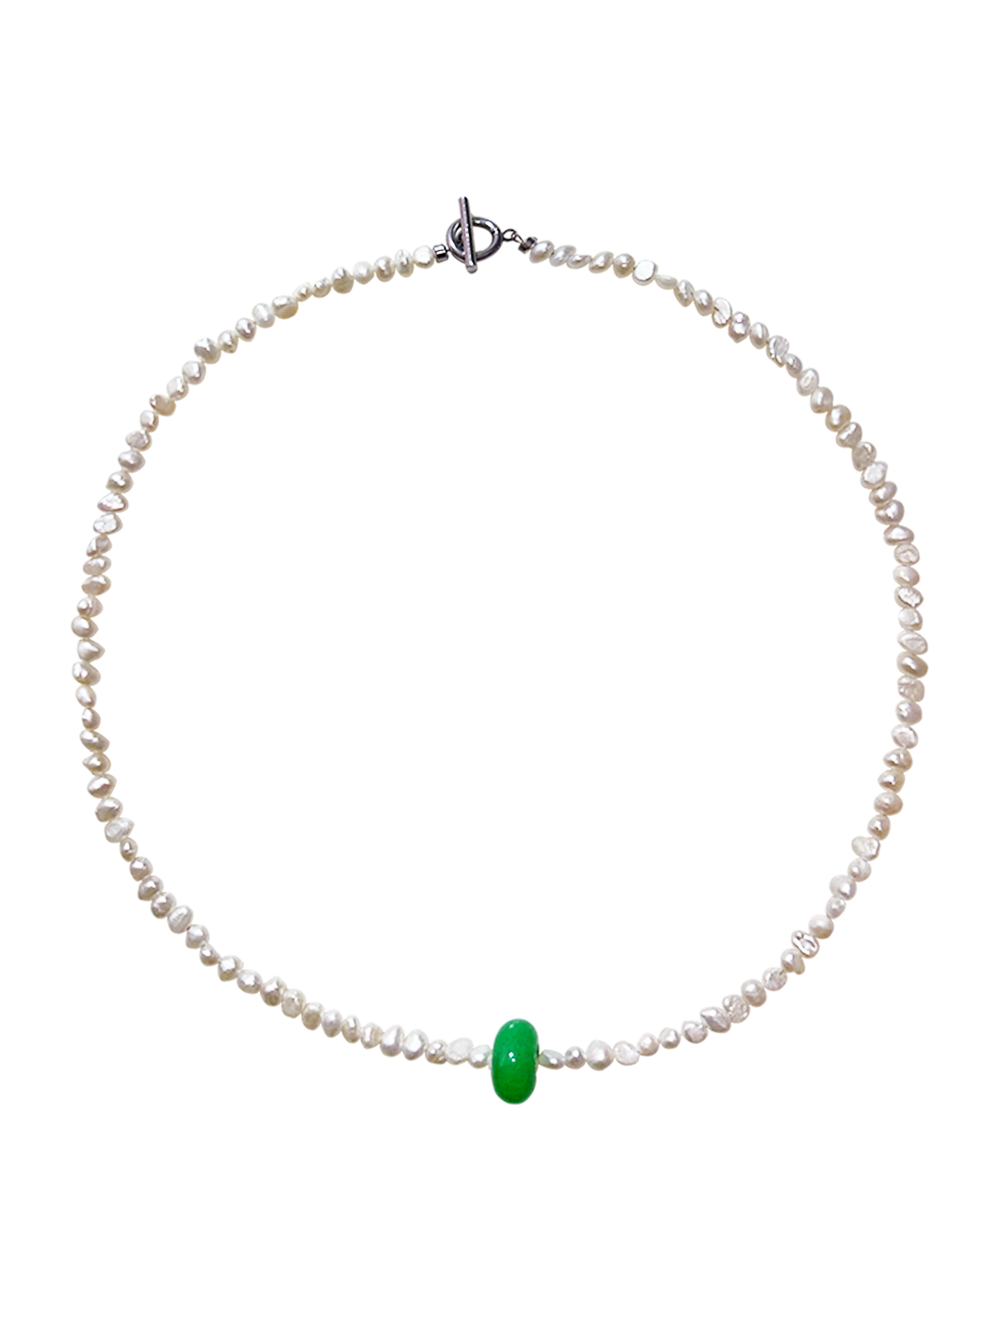 Gemstone Necklace - Apple Green